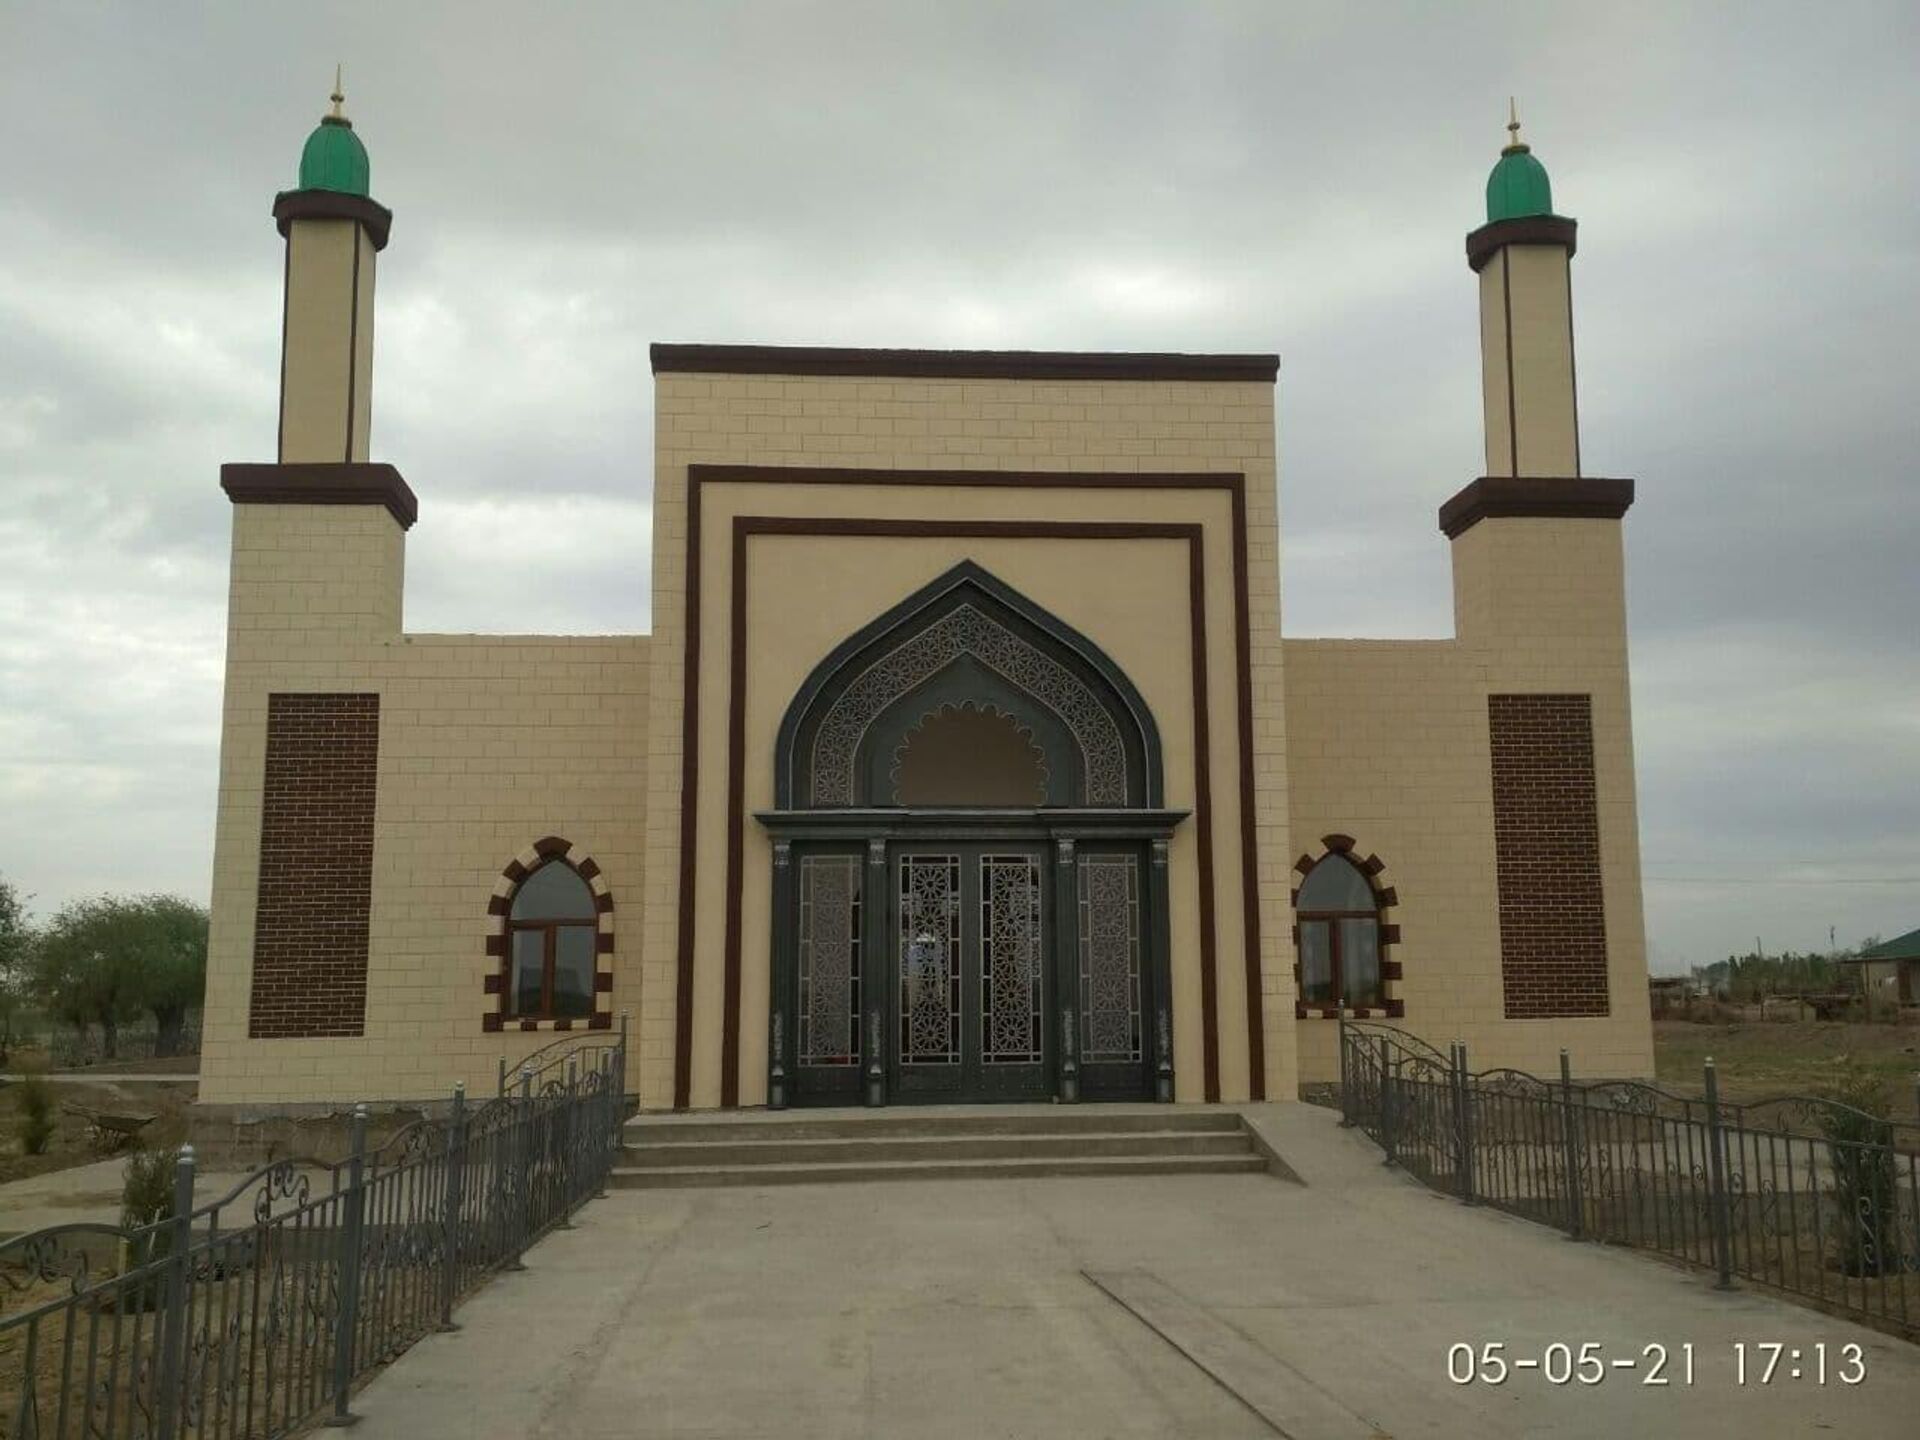 Новая мечеть открылась в Каракалпакстане - Sputnik Узбекистан, 1920, 31.05.2021